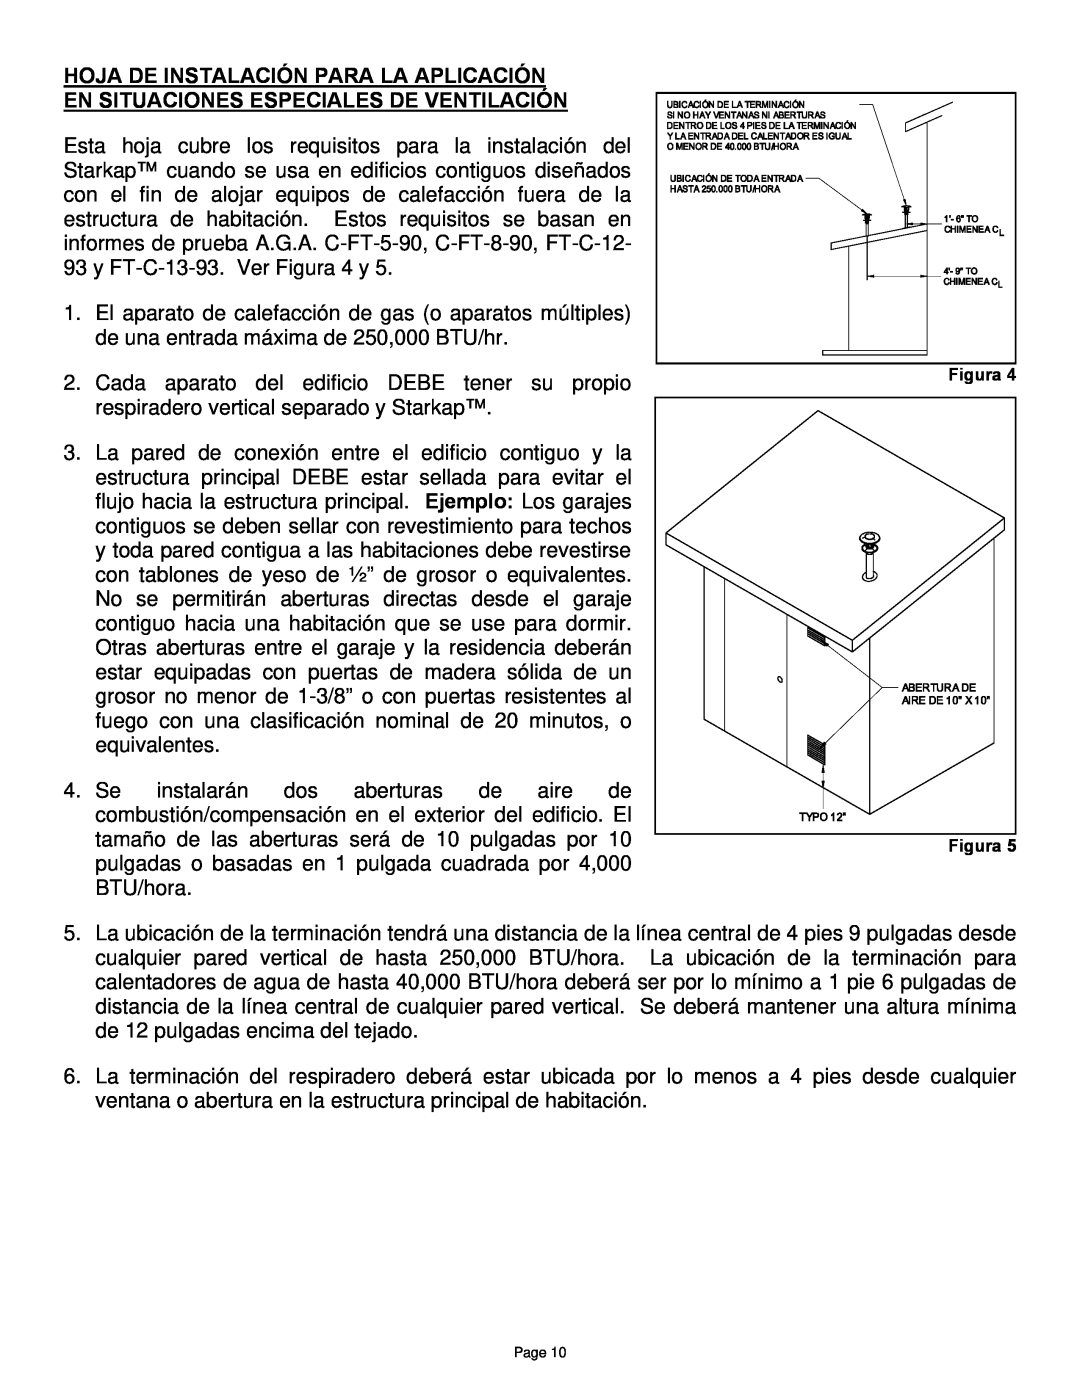 Field Controls SK-1 manual 